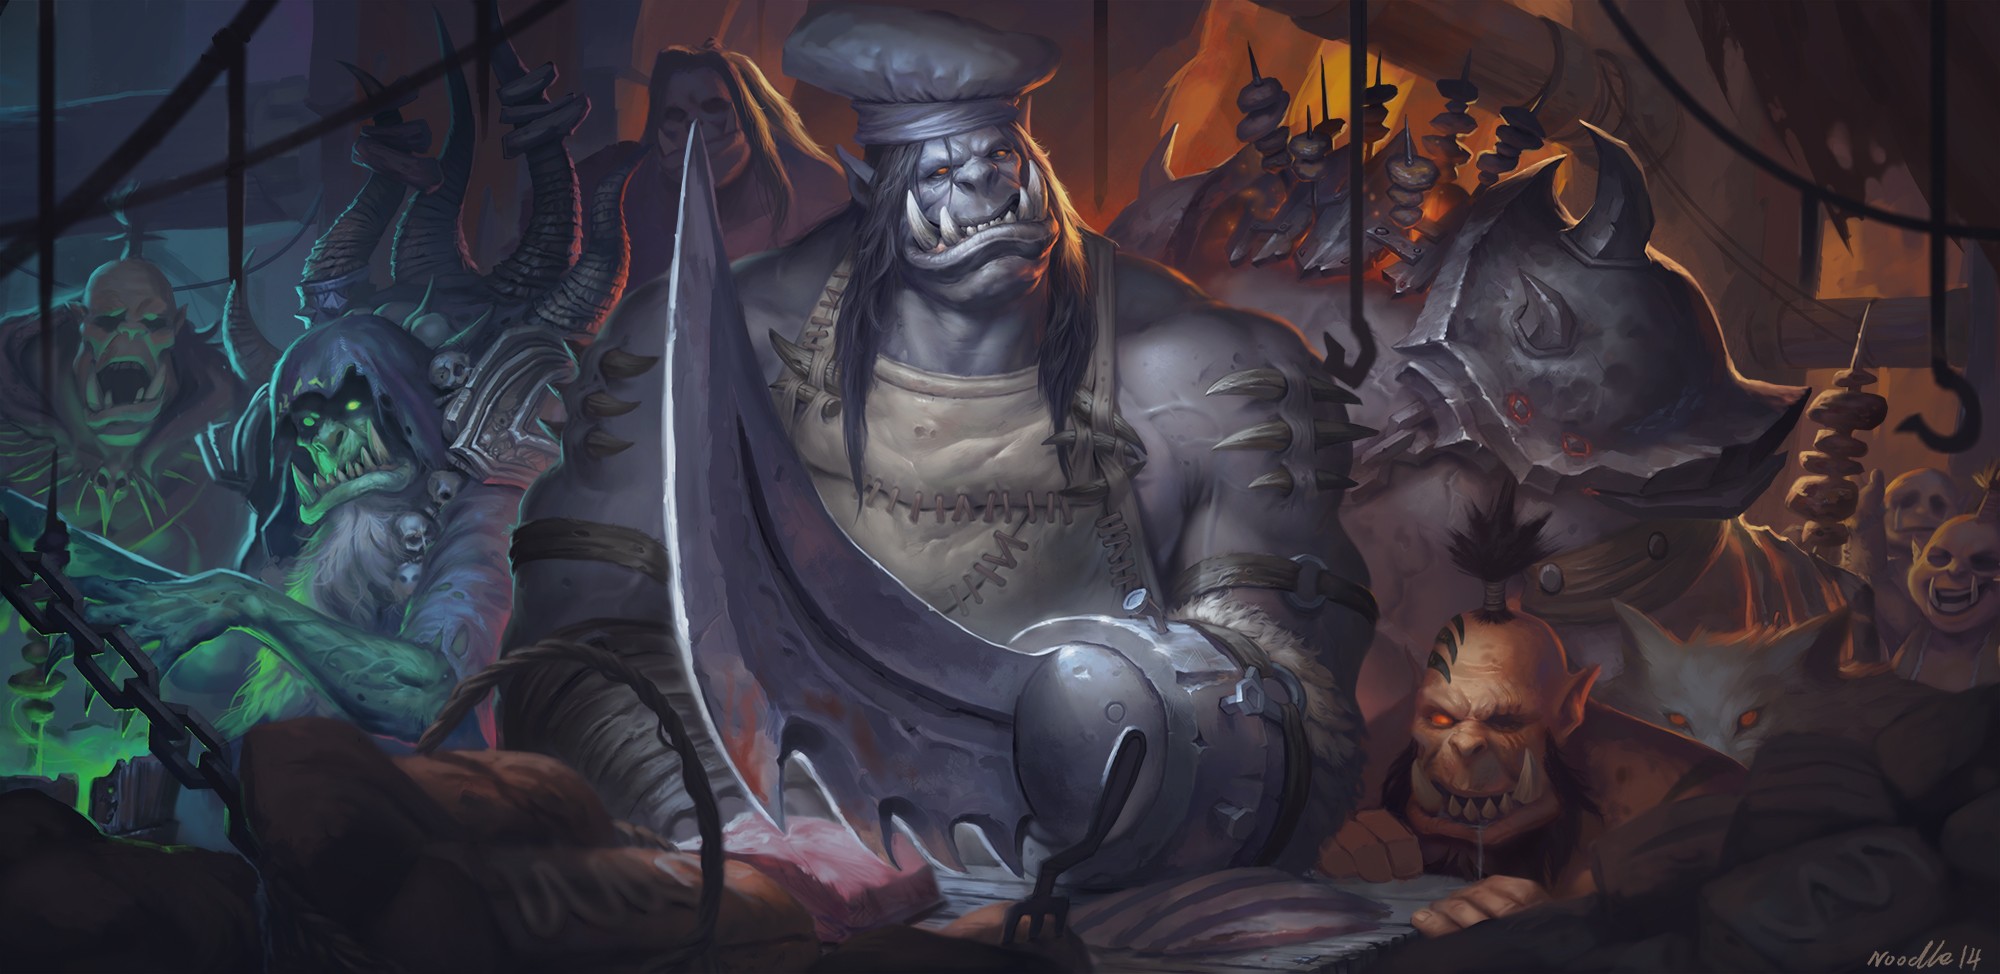 General 2000x974 orcs fantasy art artwork digital art cook World of Warcraft Kargath video games Kilrogg Deadeye Ner'zhul Gul'dan PC gaming video game art